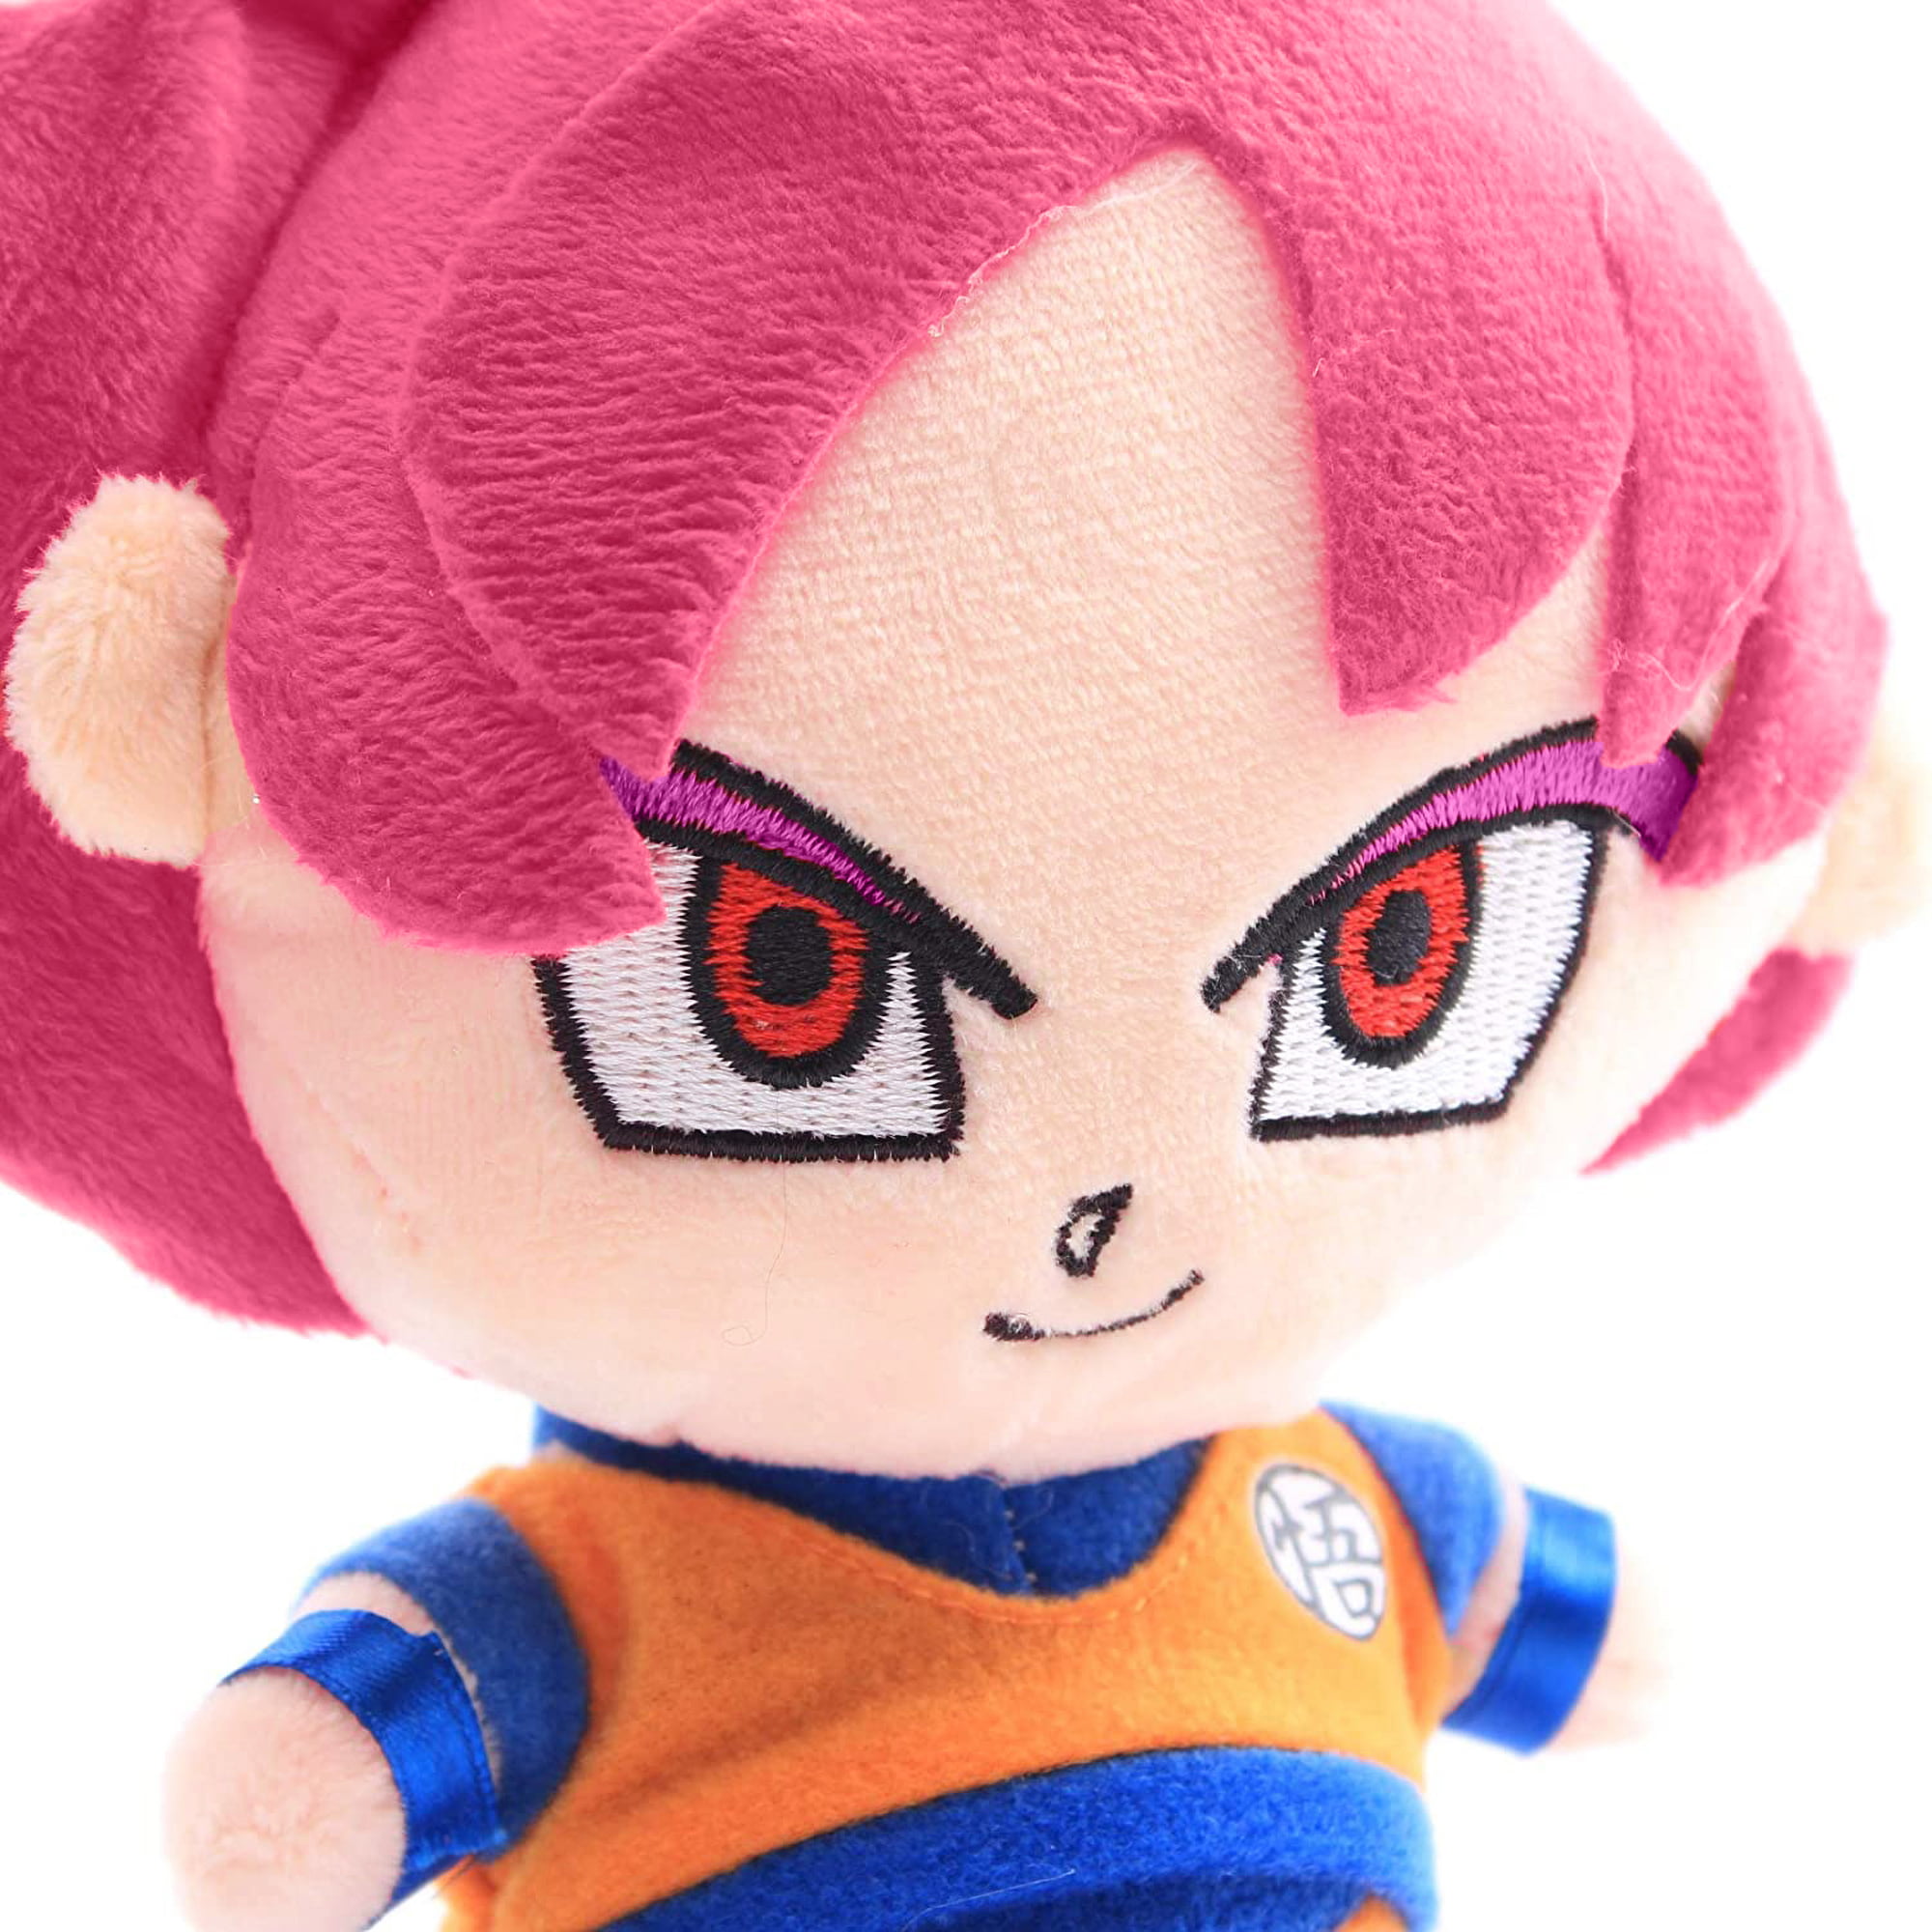 Anime Dragon Ball Z Red Super Saiyan God Goku Plush Figure Toy Stuffed Doll 8'' 